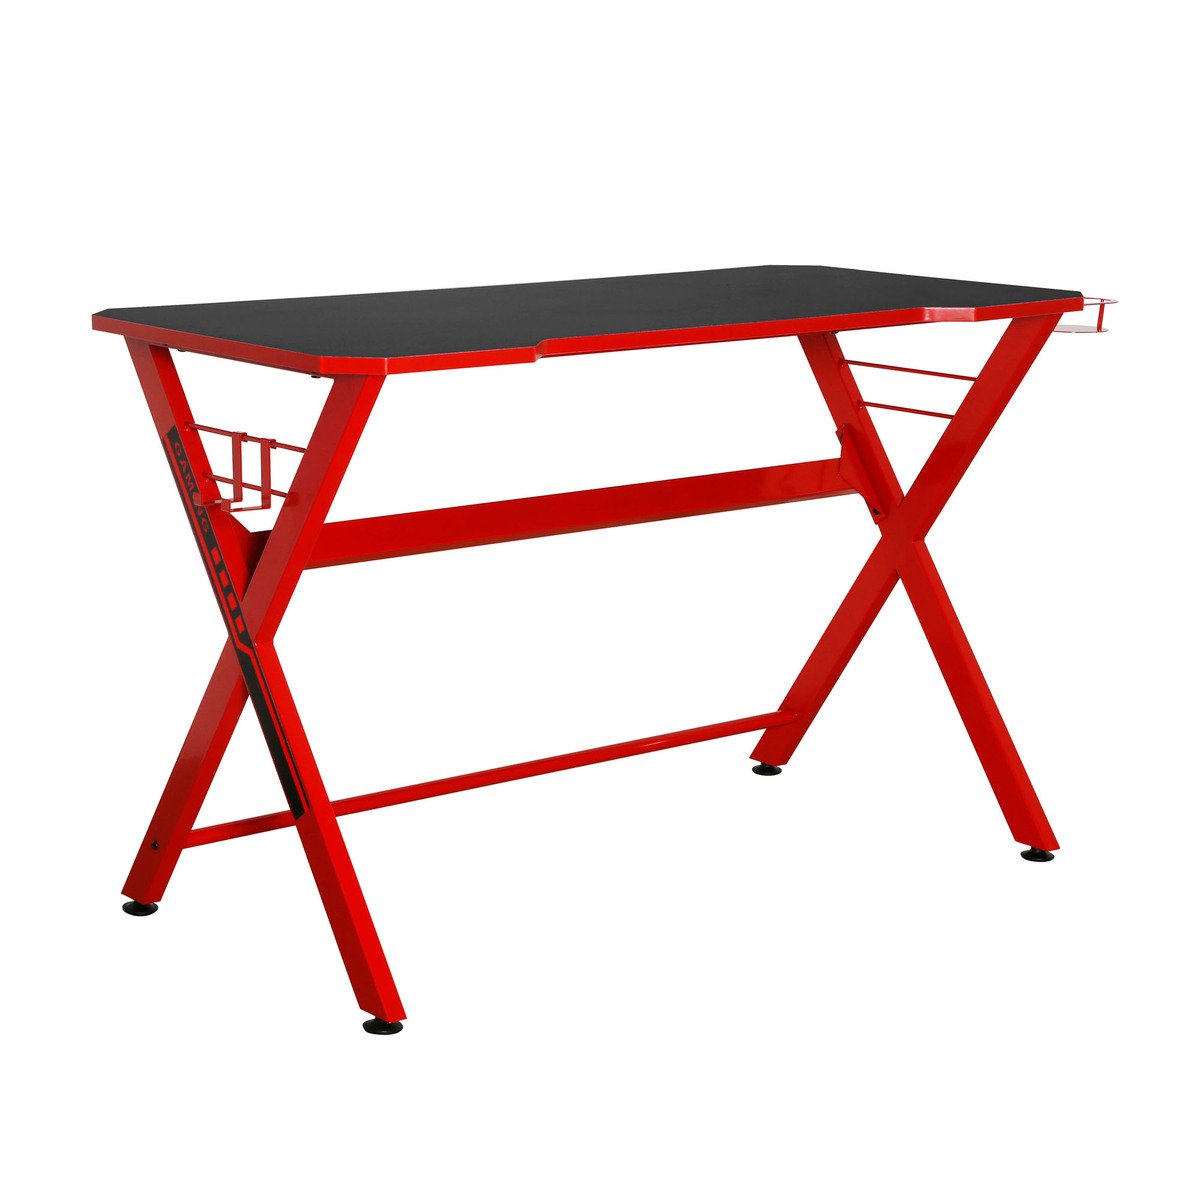 Maple Leaf Multi Purpose Table FG2096,Color:Red&Black